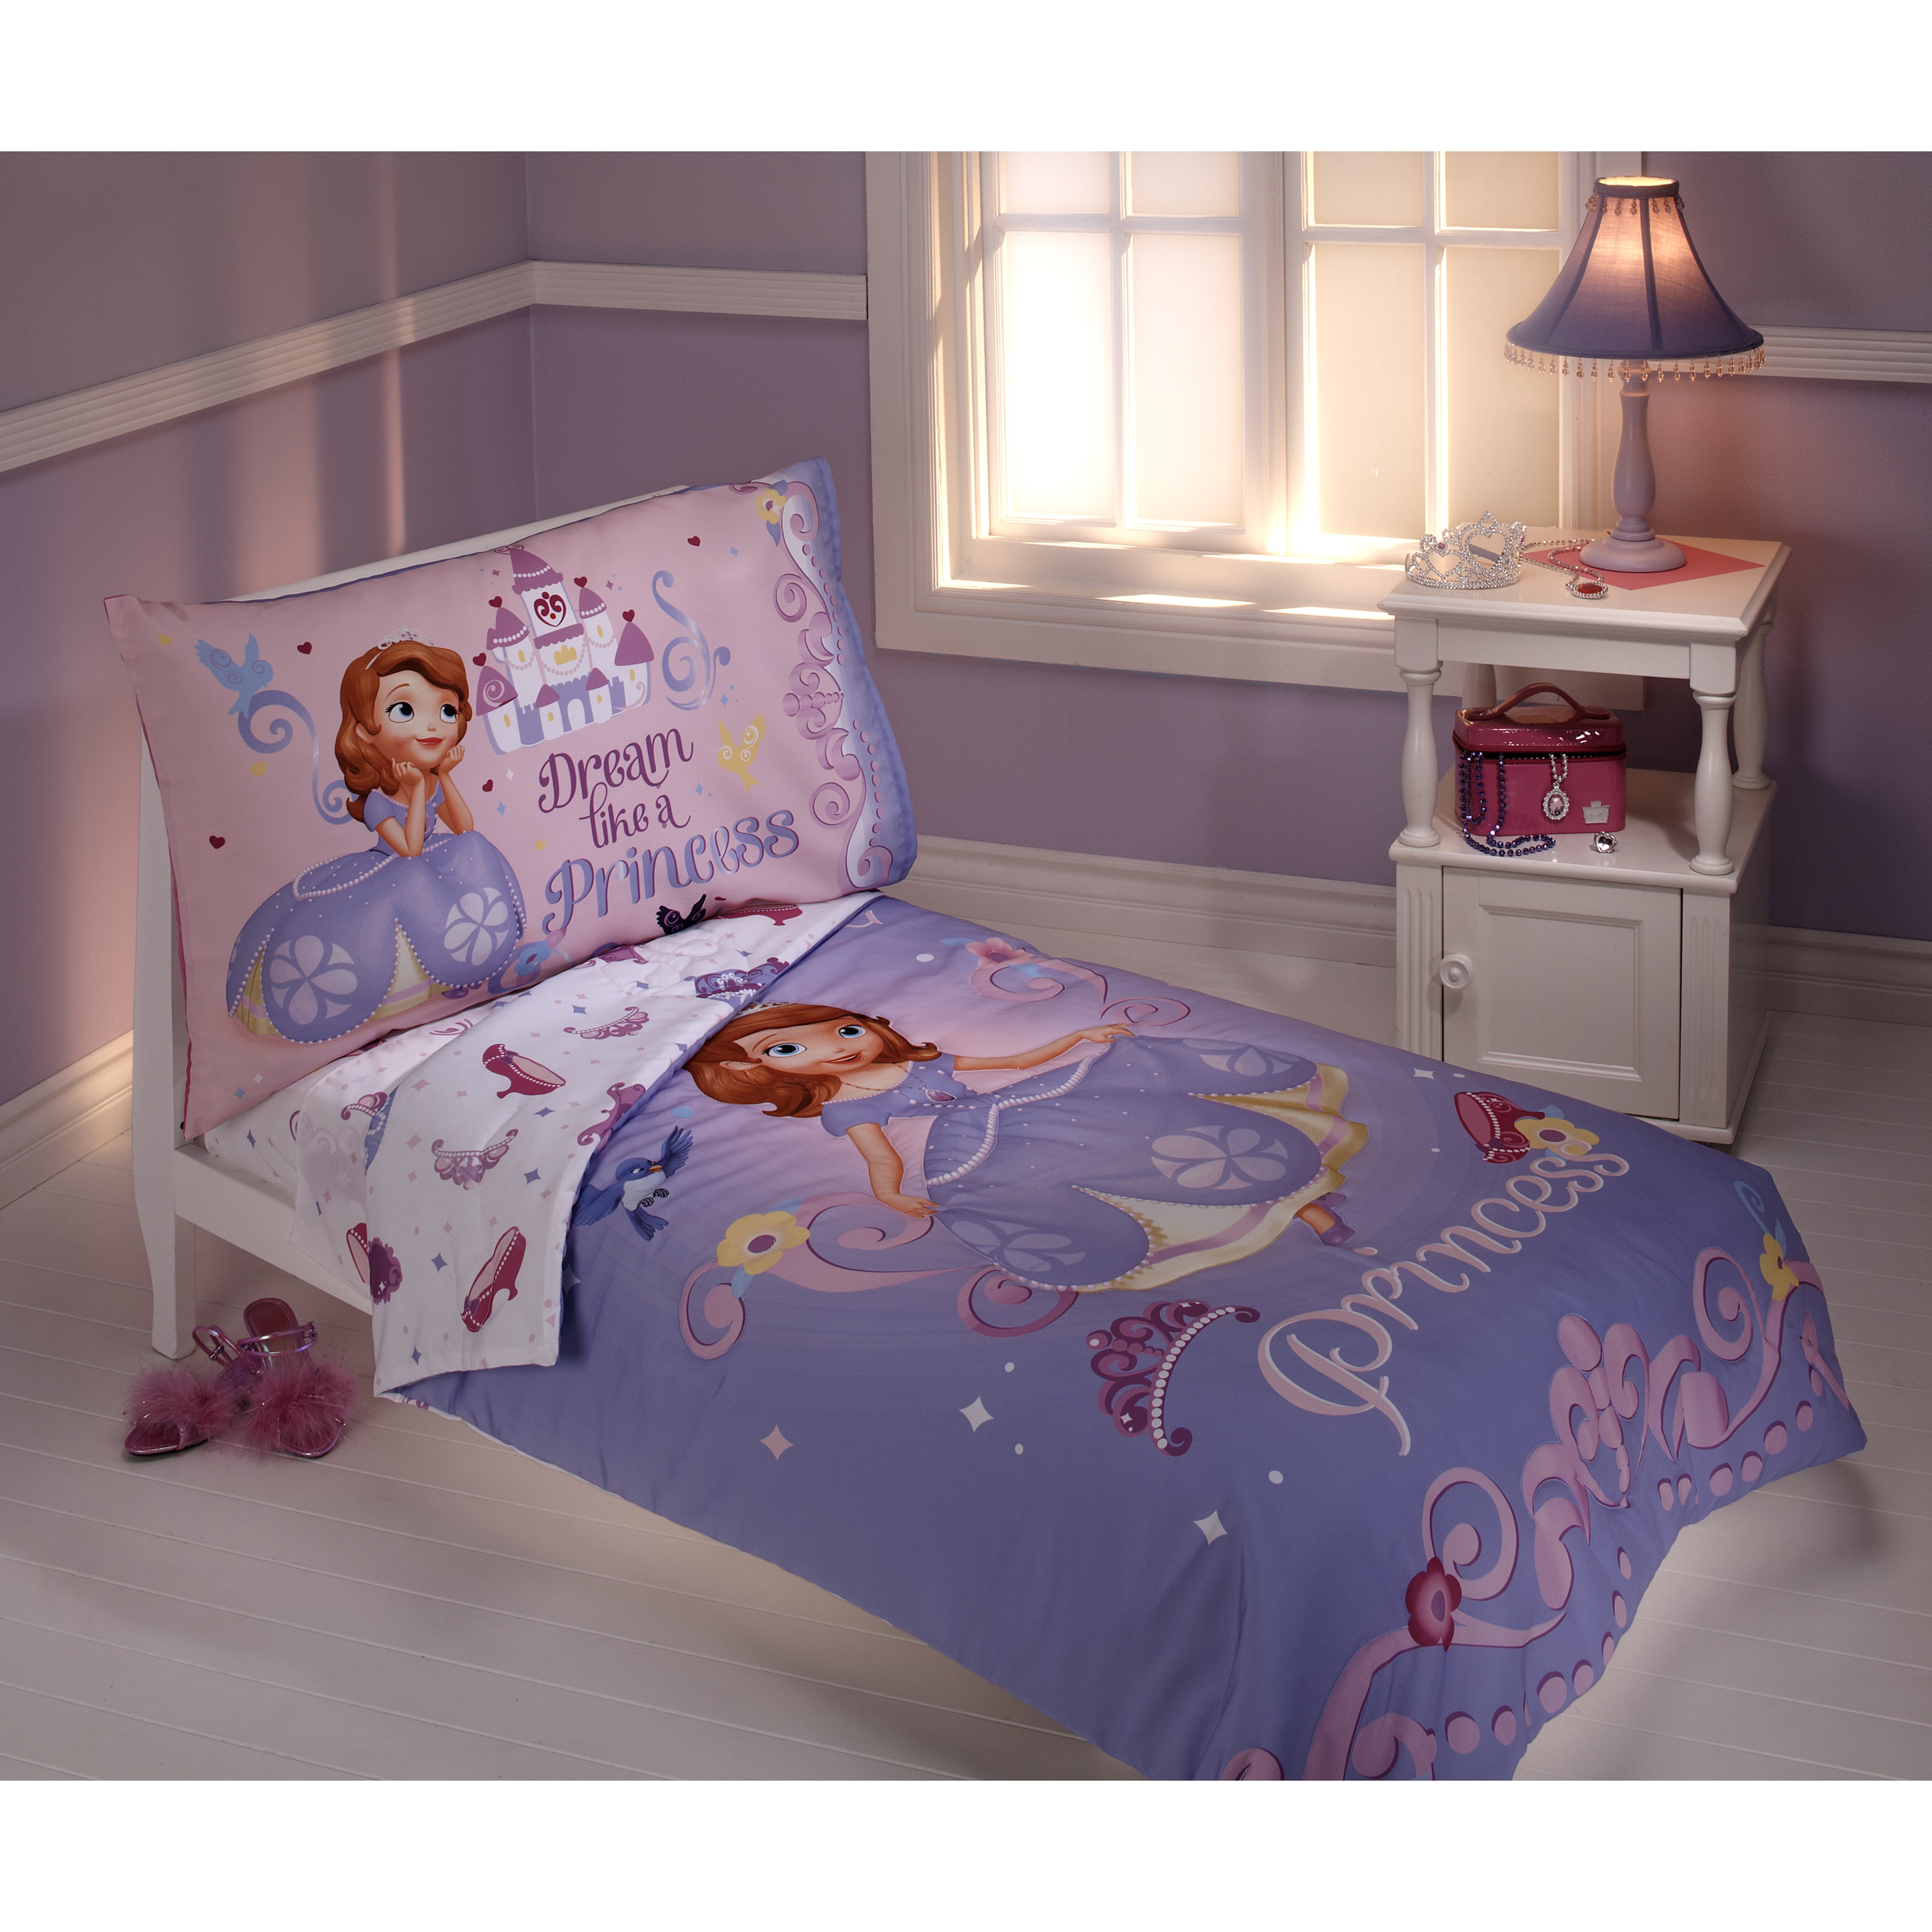 Girls Disney Sofia The First New 3 Prints 4 Piece Toddler Bedding Set Kids Teens Bedding Kids Teens Bedding Sets